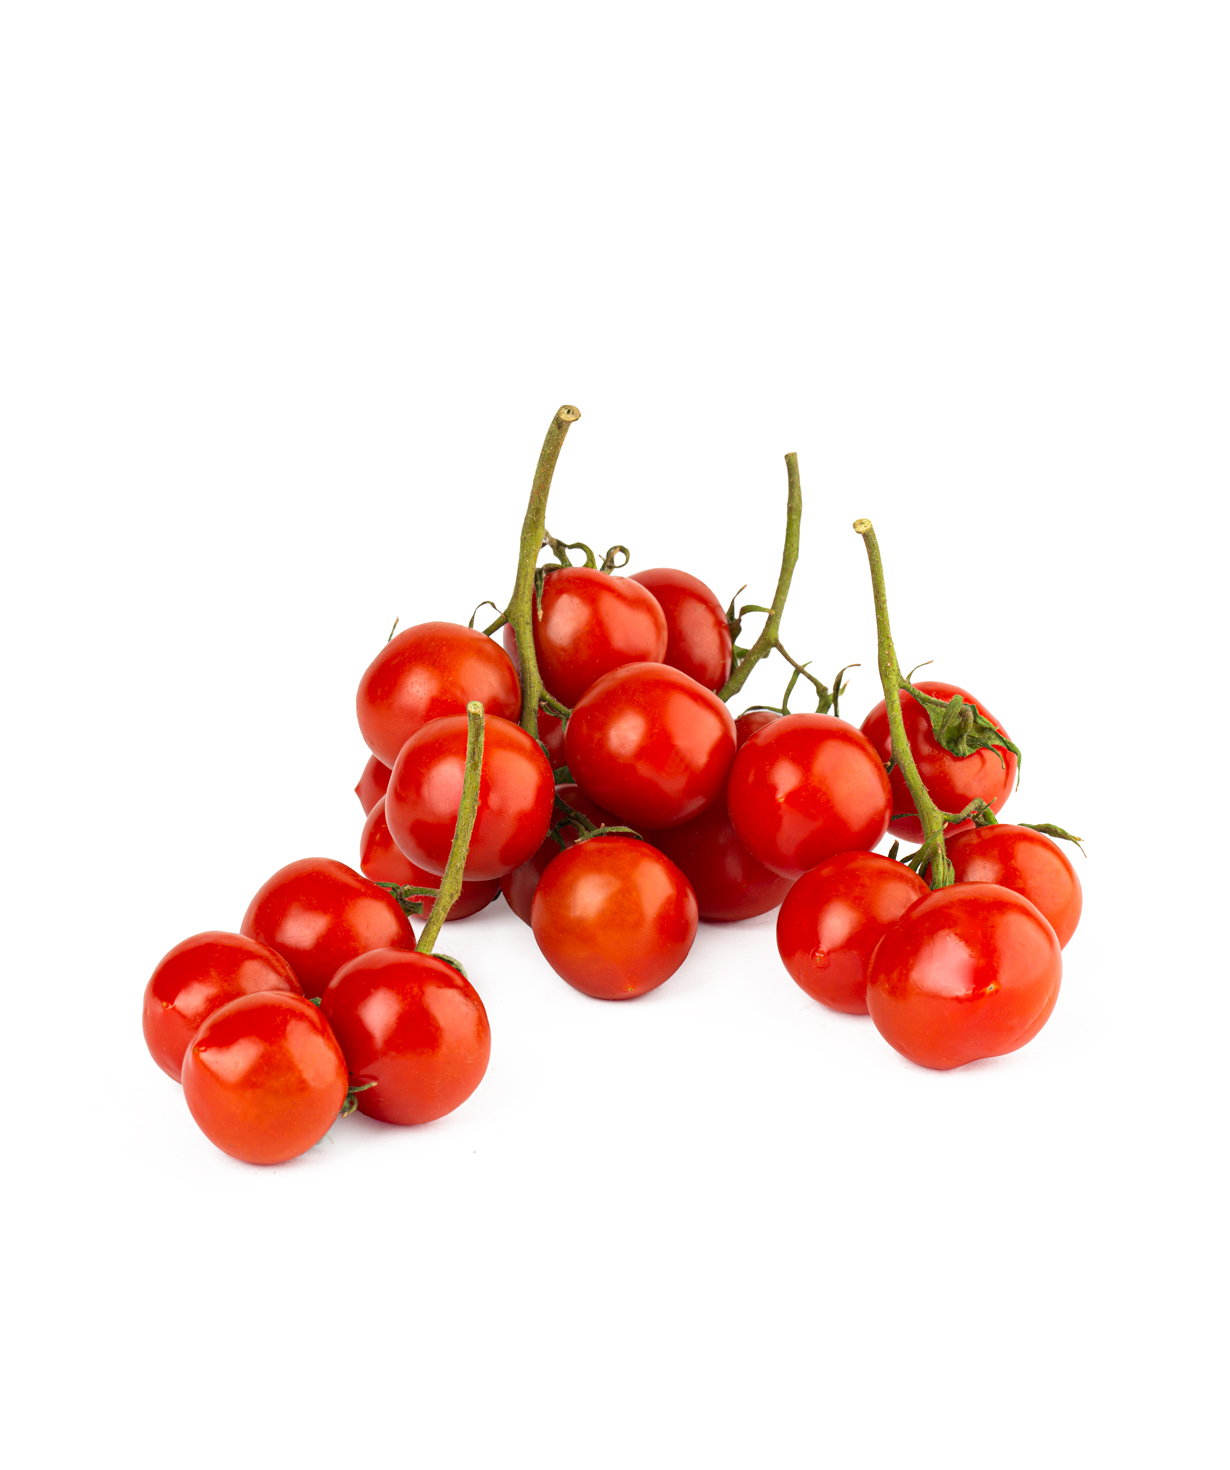 Cherry tomatoes1 kg